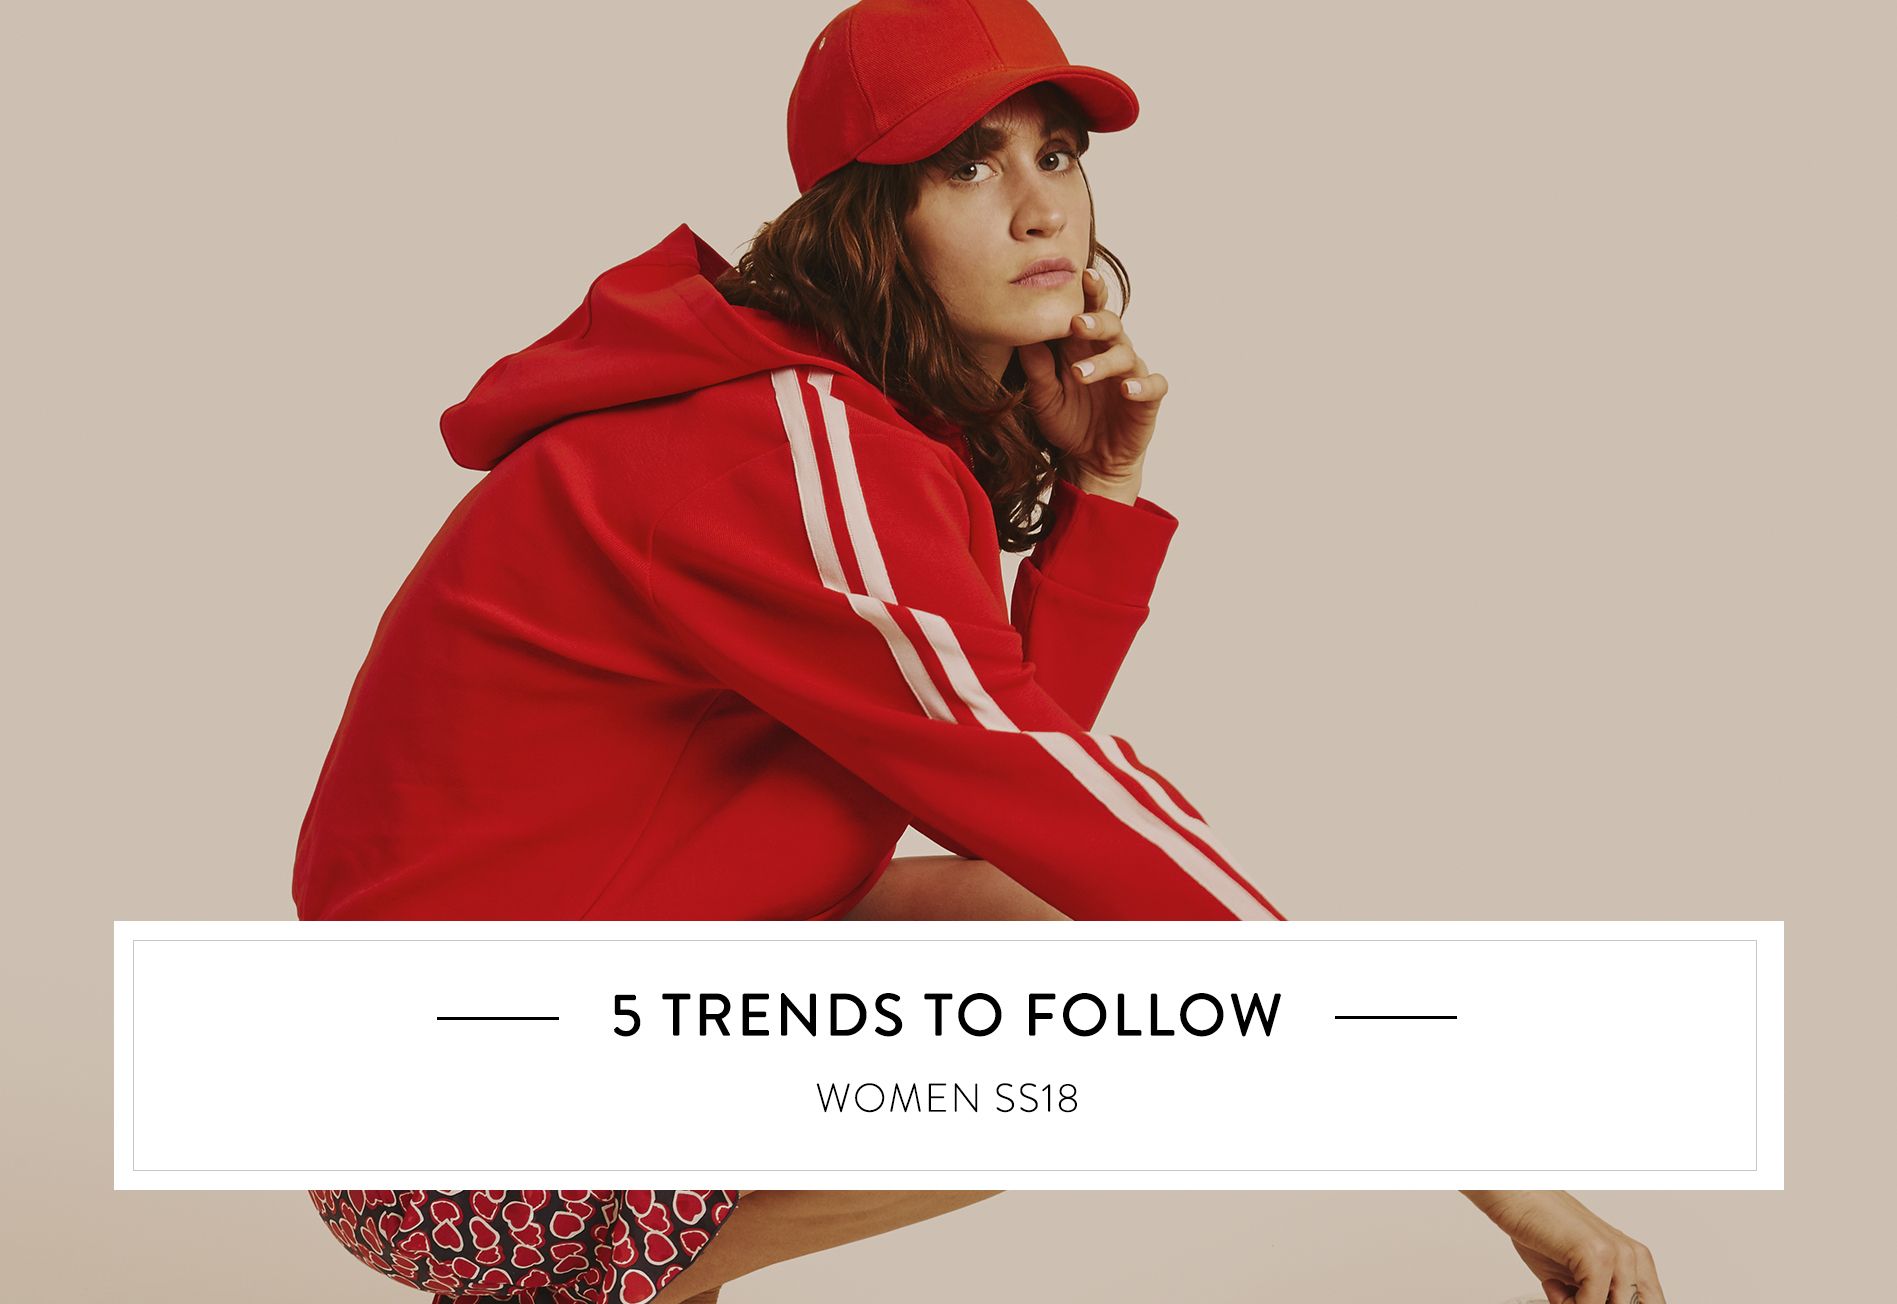 5 women trends to follow